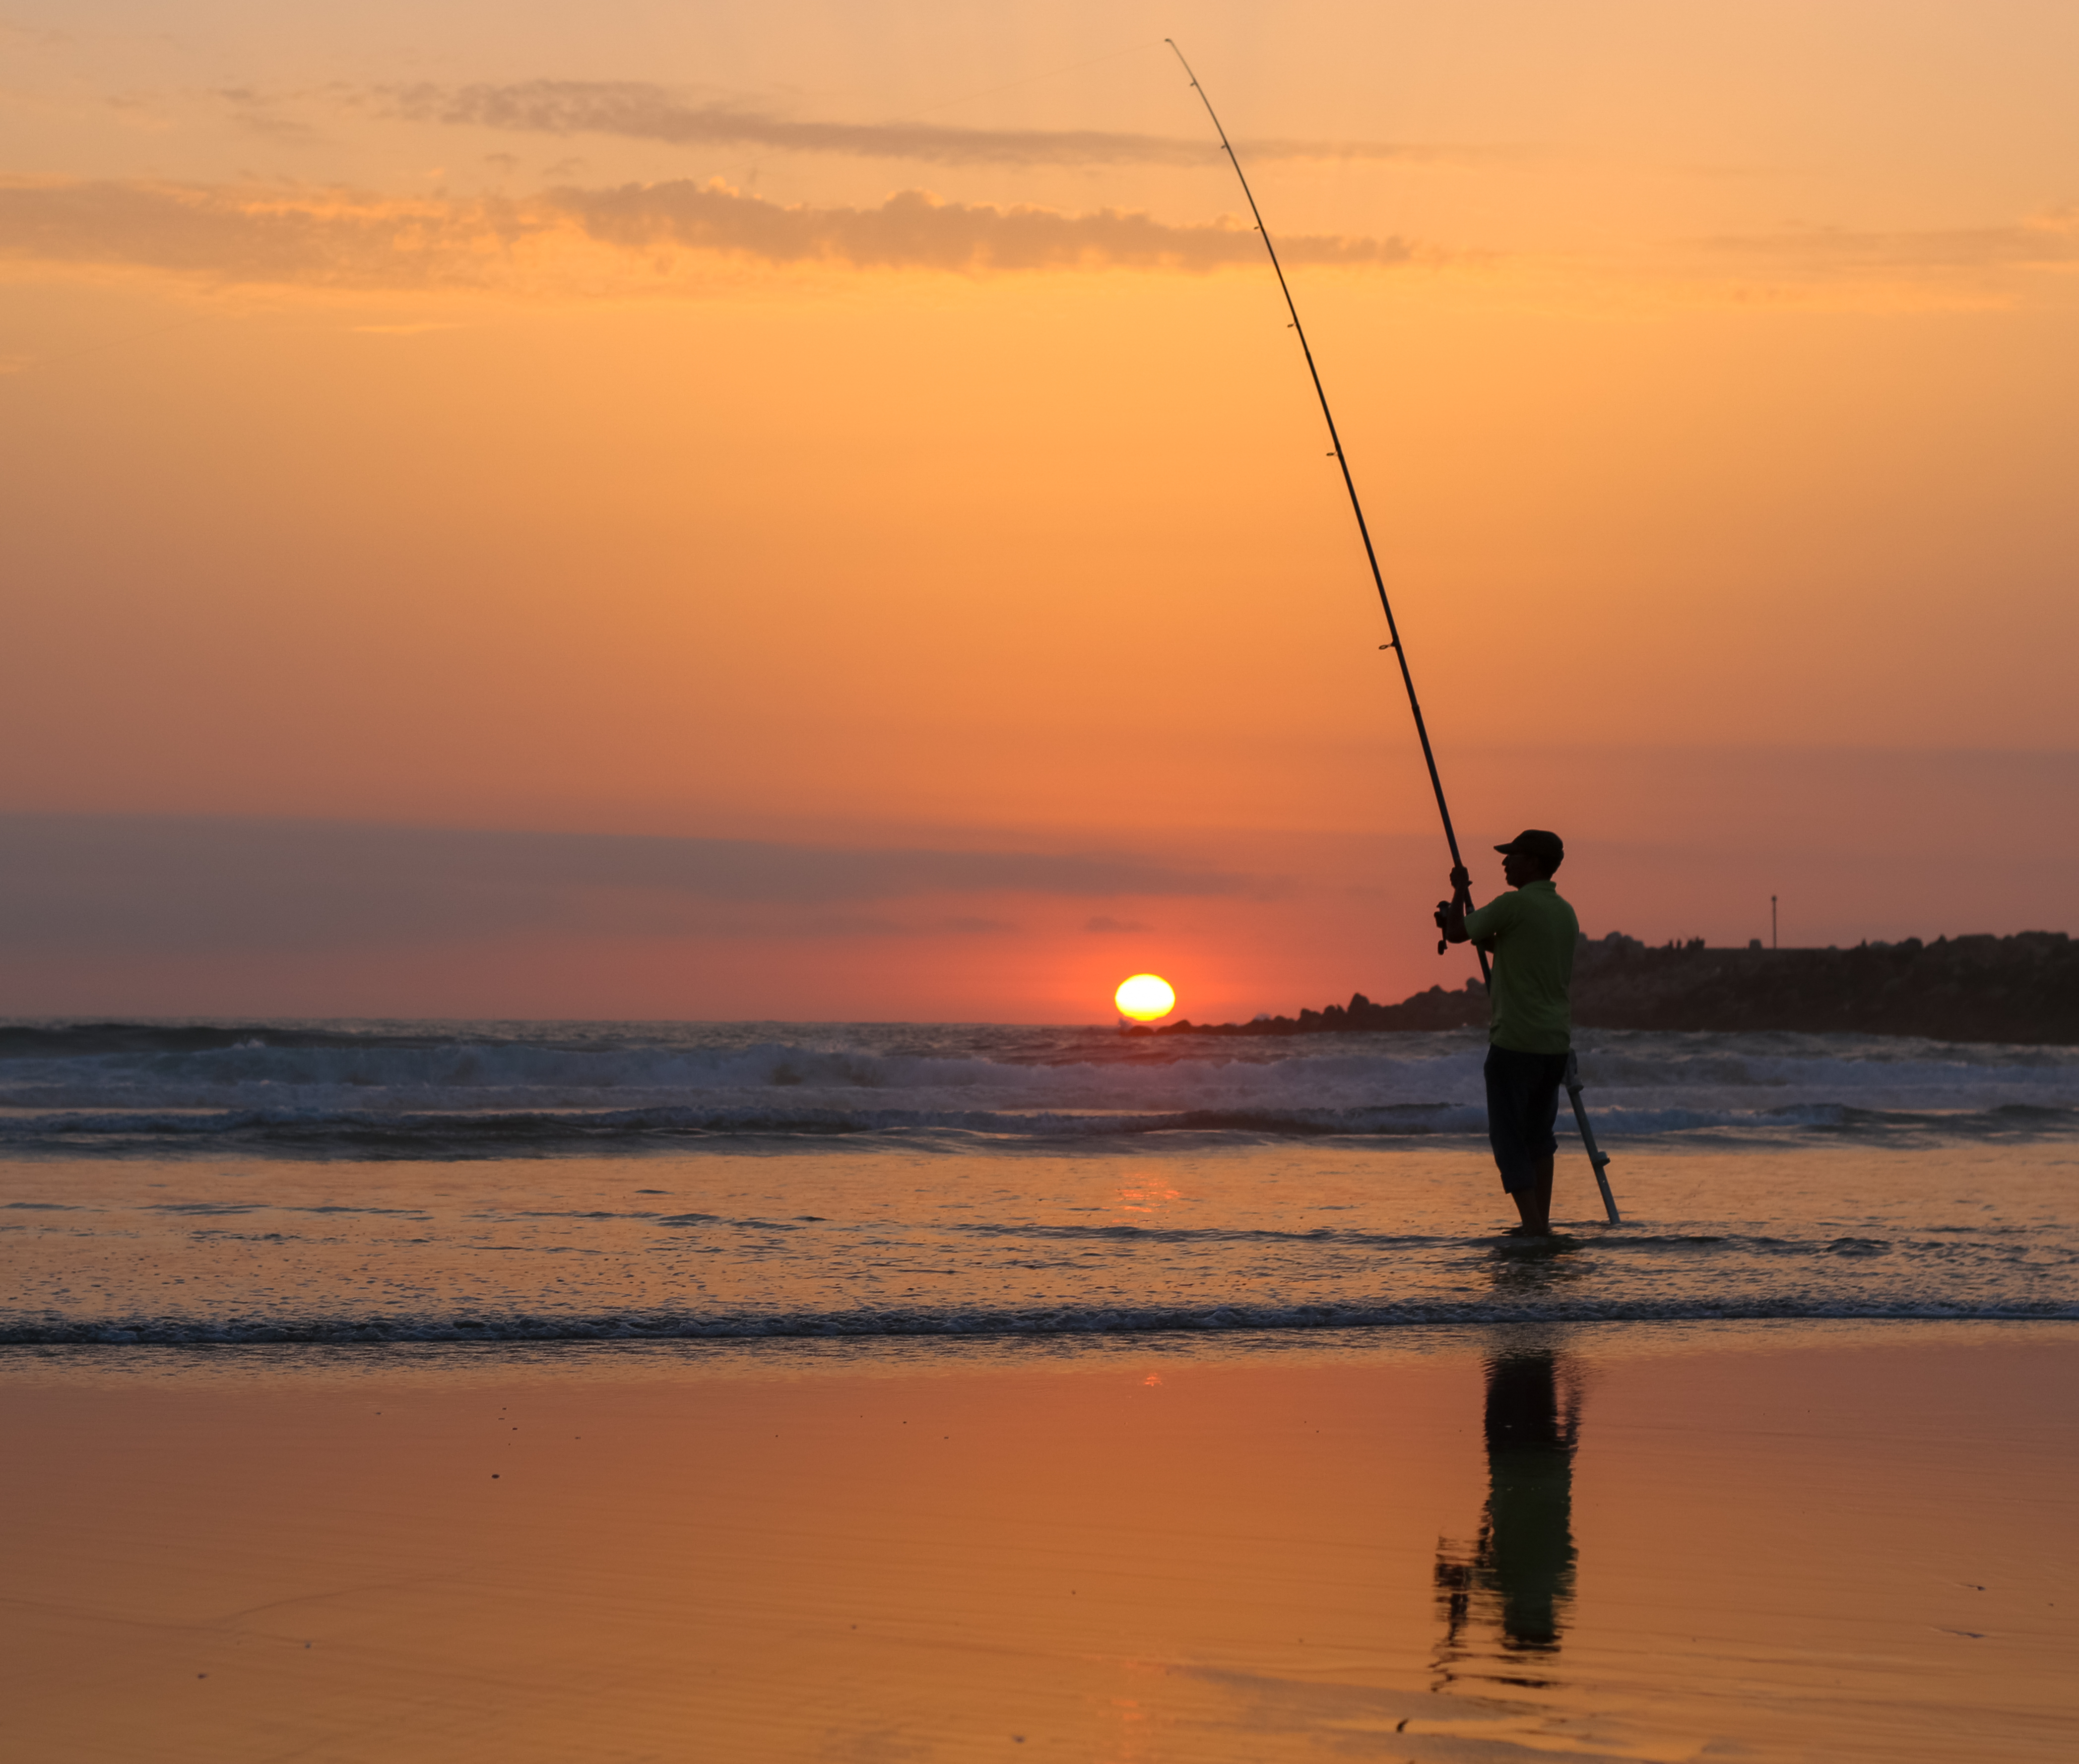 File:Man fishing at sunset in Mehdia beach.jpg - Wikimedia Commons